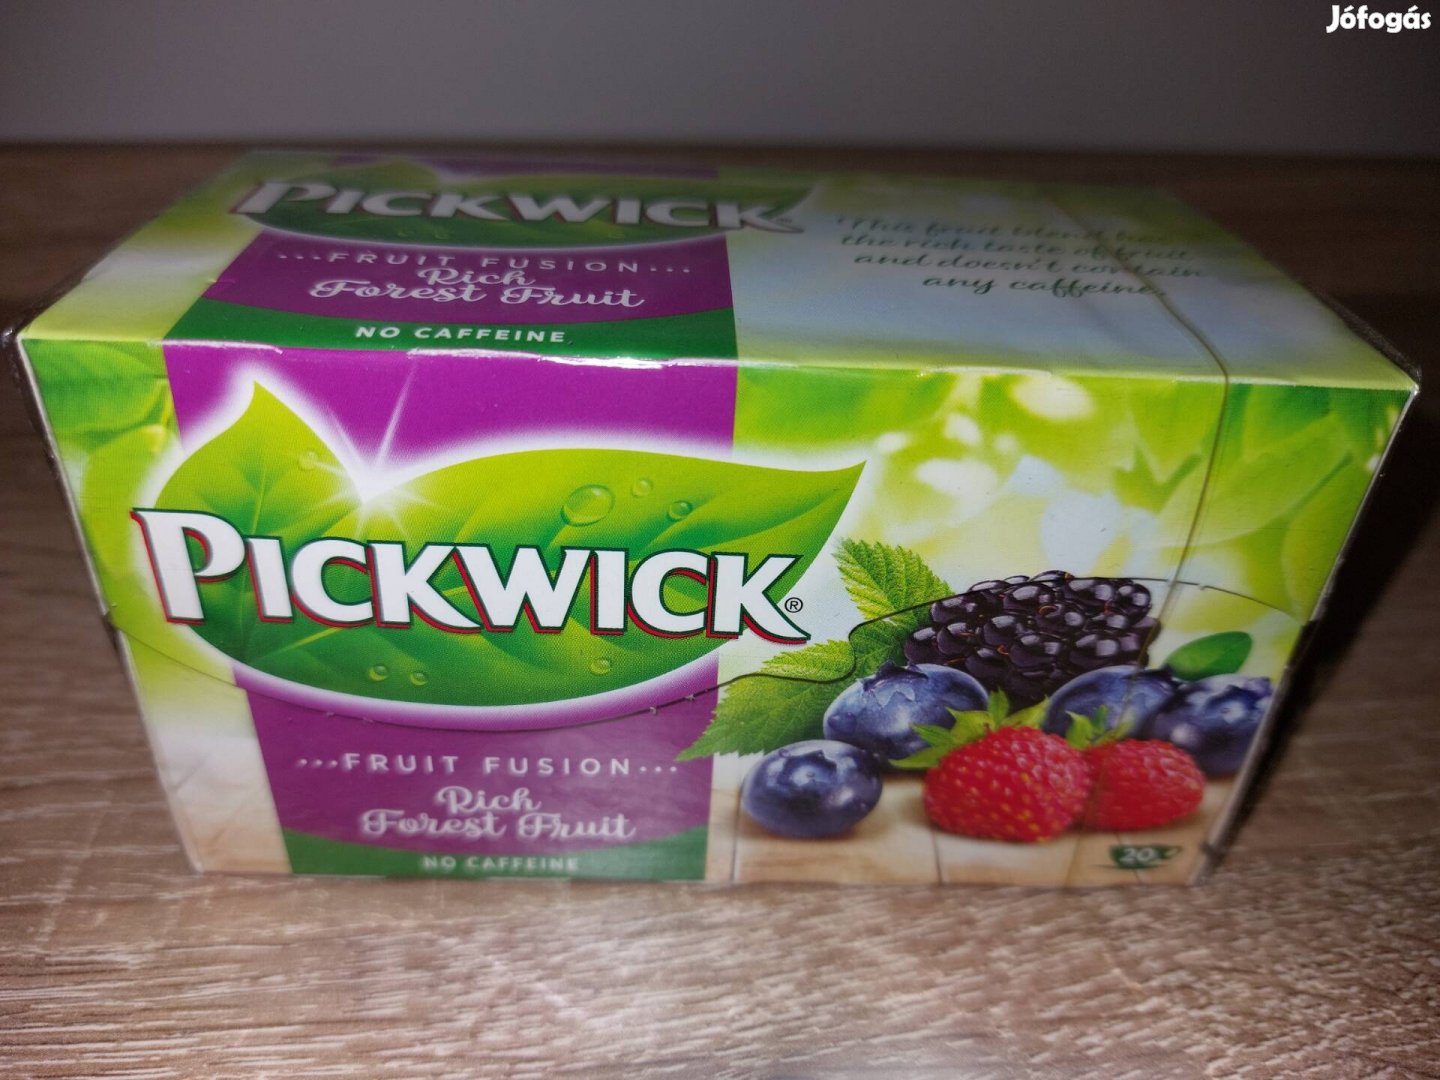 Pickwick tea